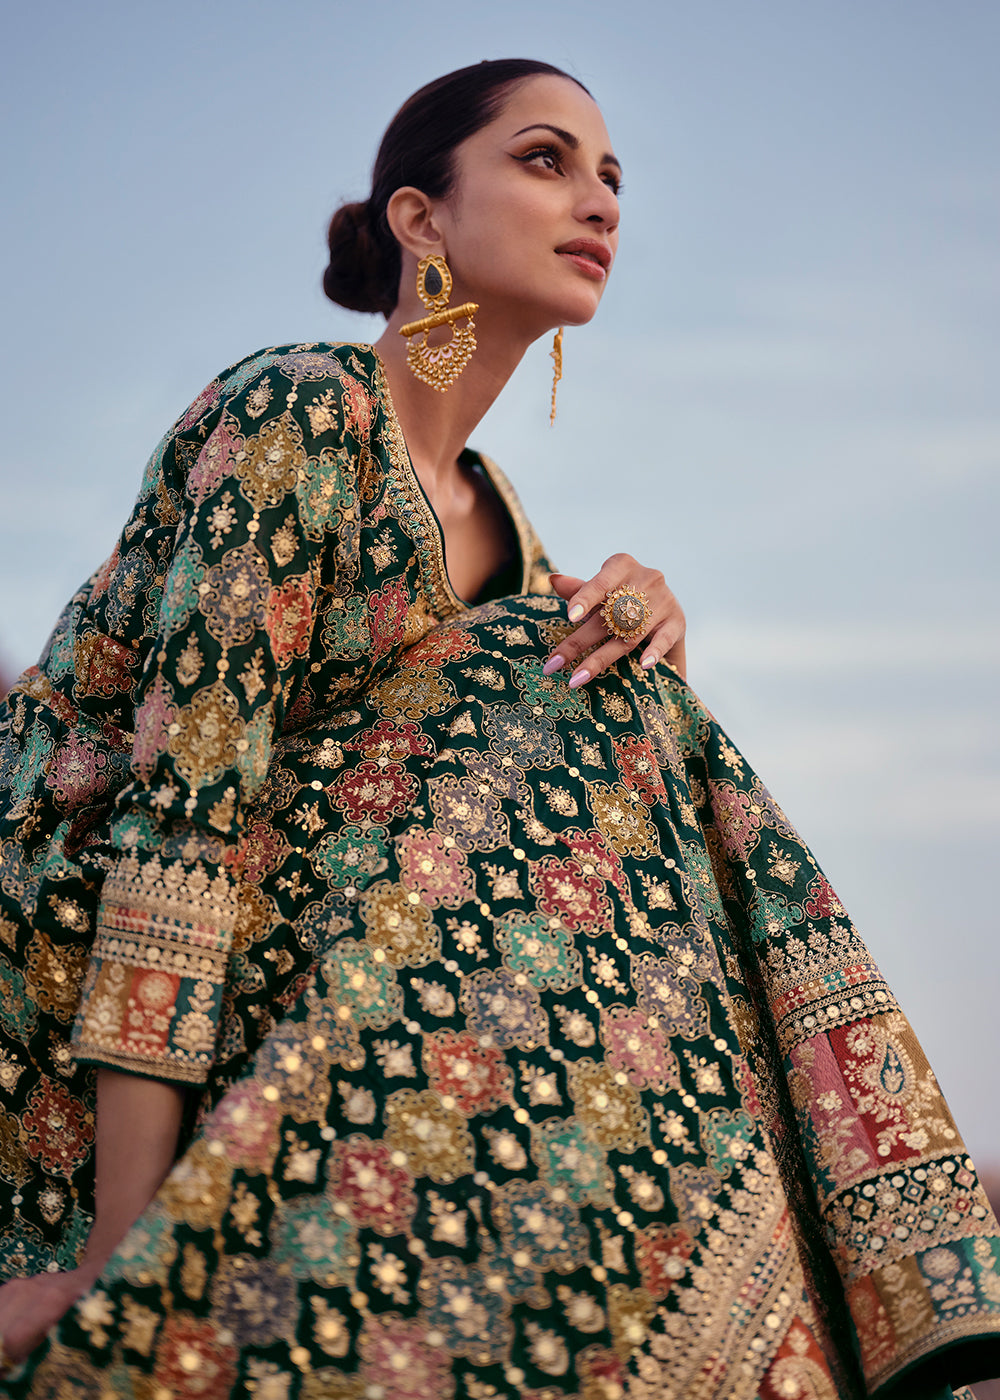 Buy Now Dark Green Heavy Georgette Floor Length Anarkali Gown Online in USA, UK, Australia, Canada & Worldwide at Empress Clothing. 